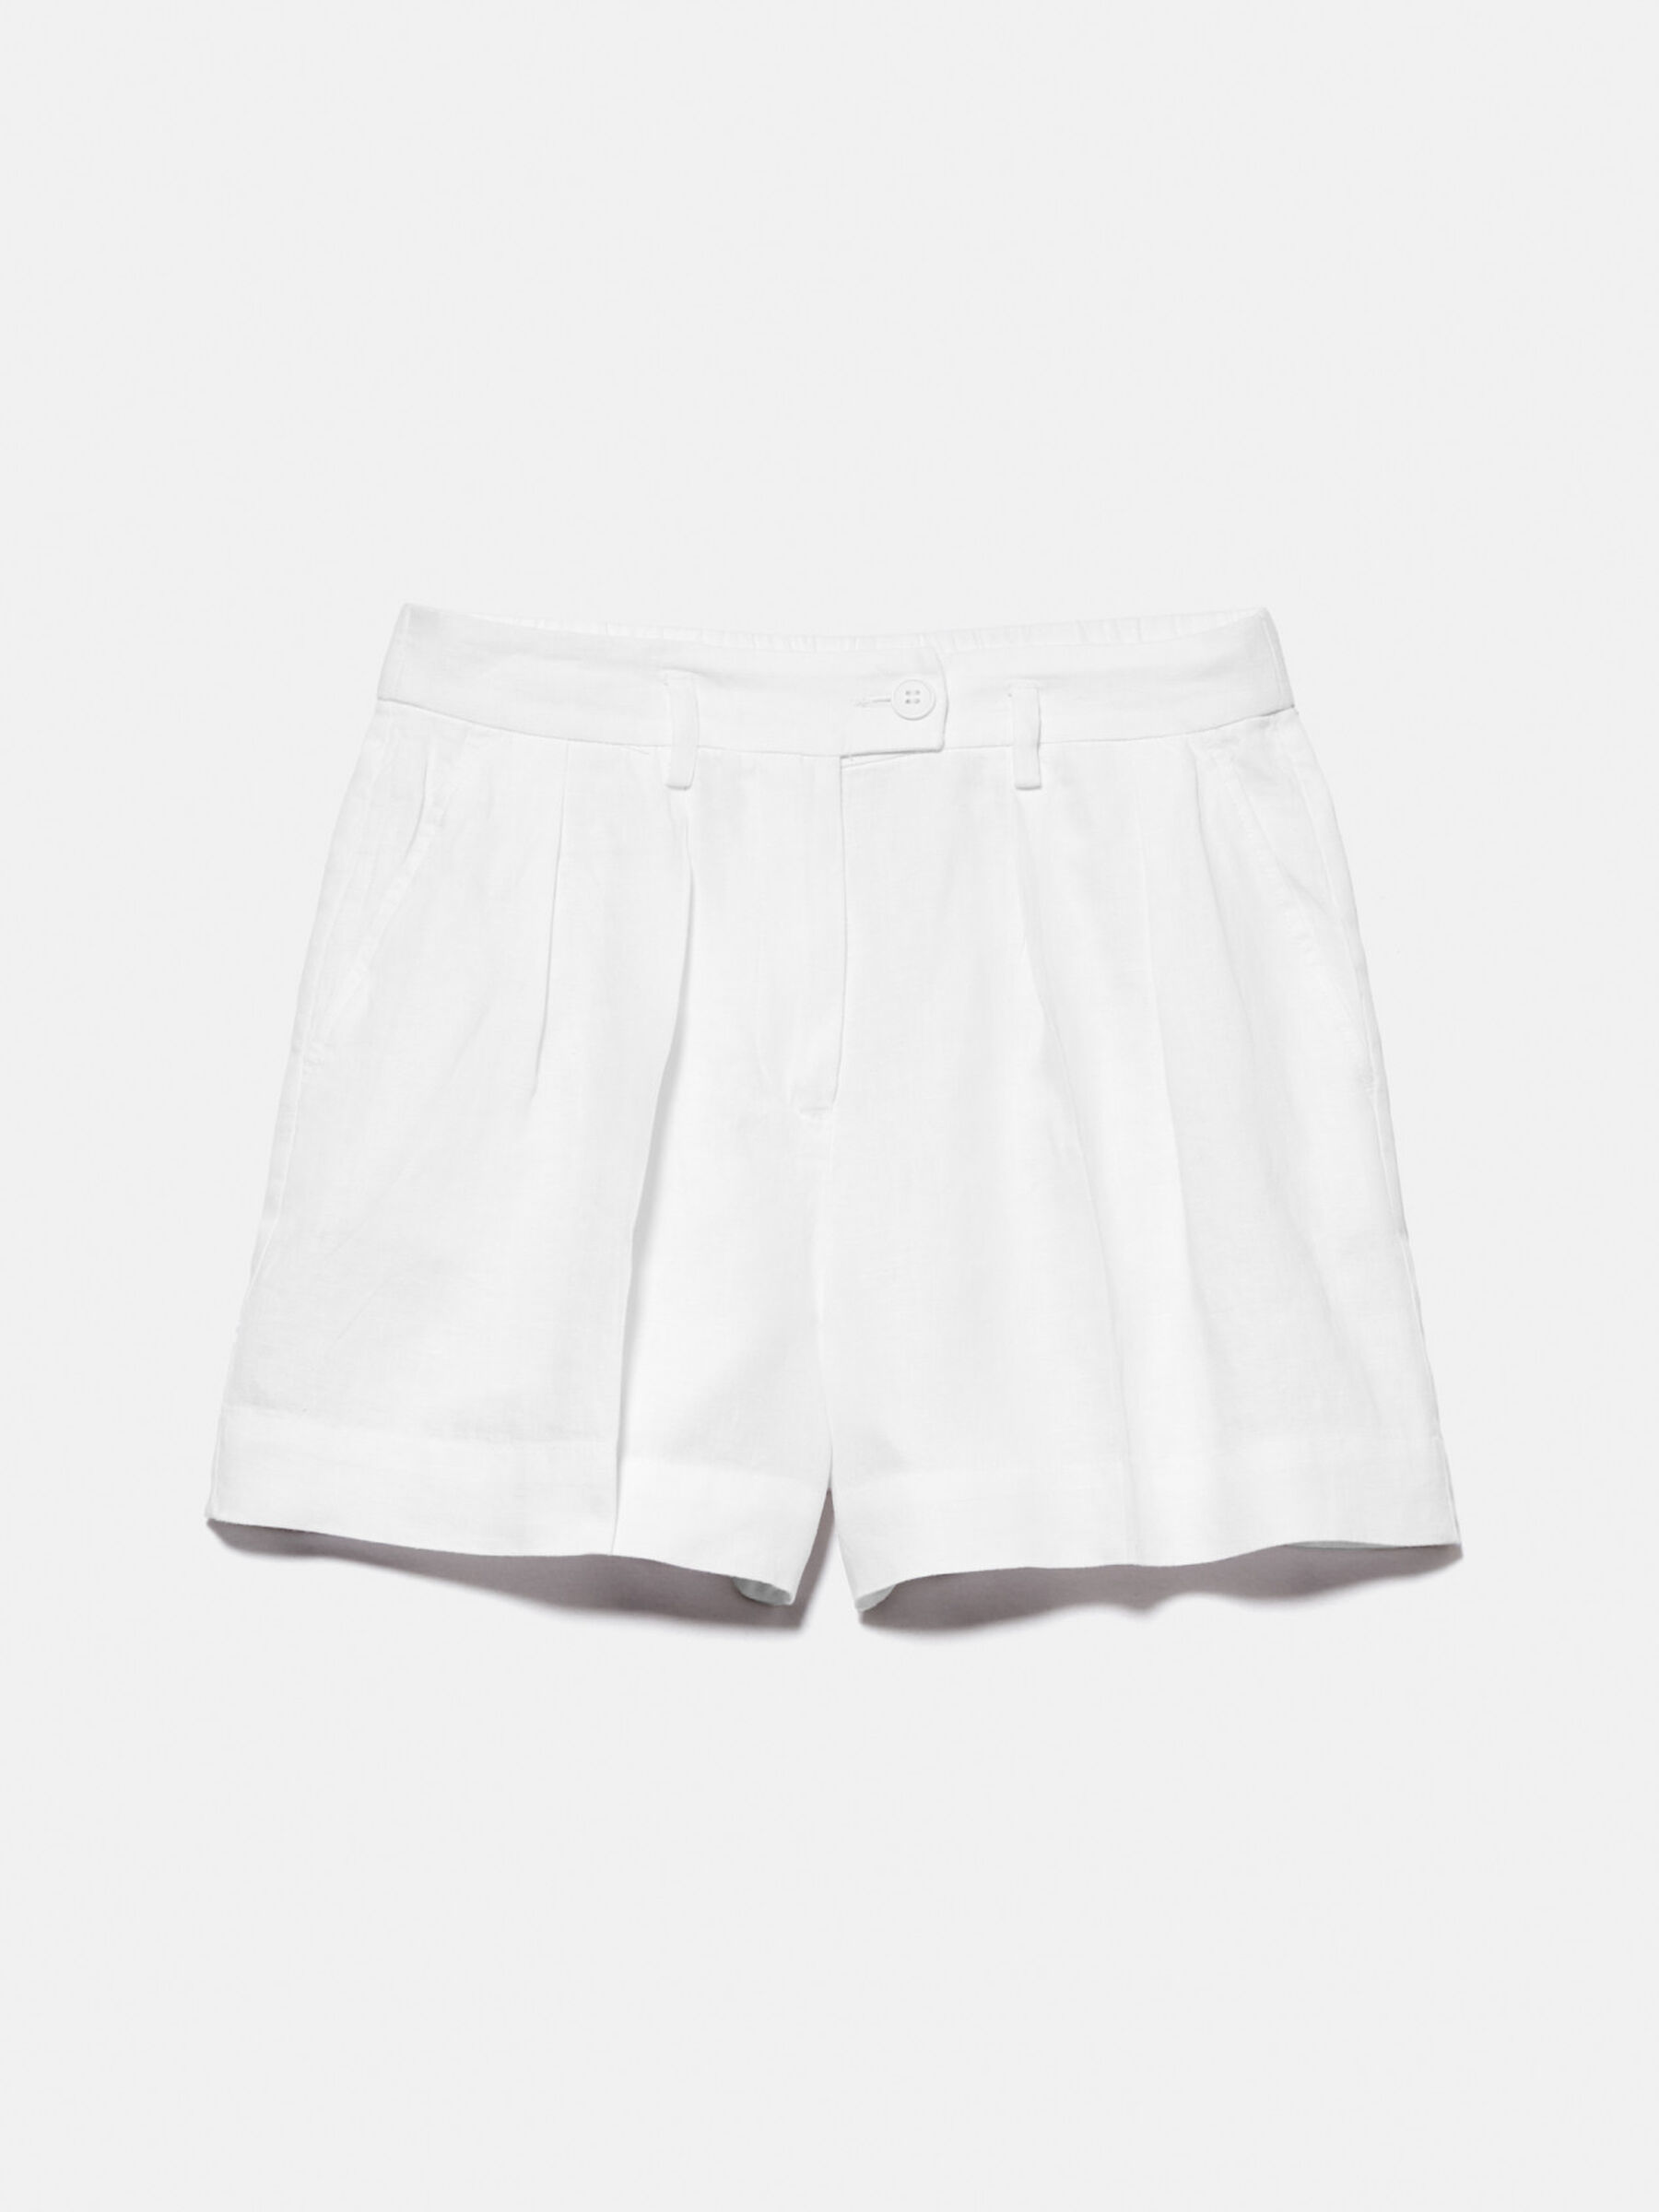 linen - White shorts, 100% Sisley